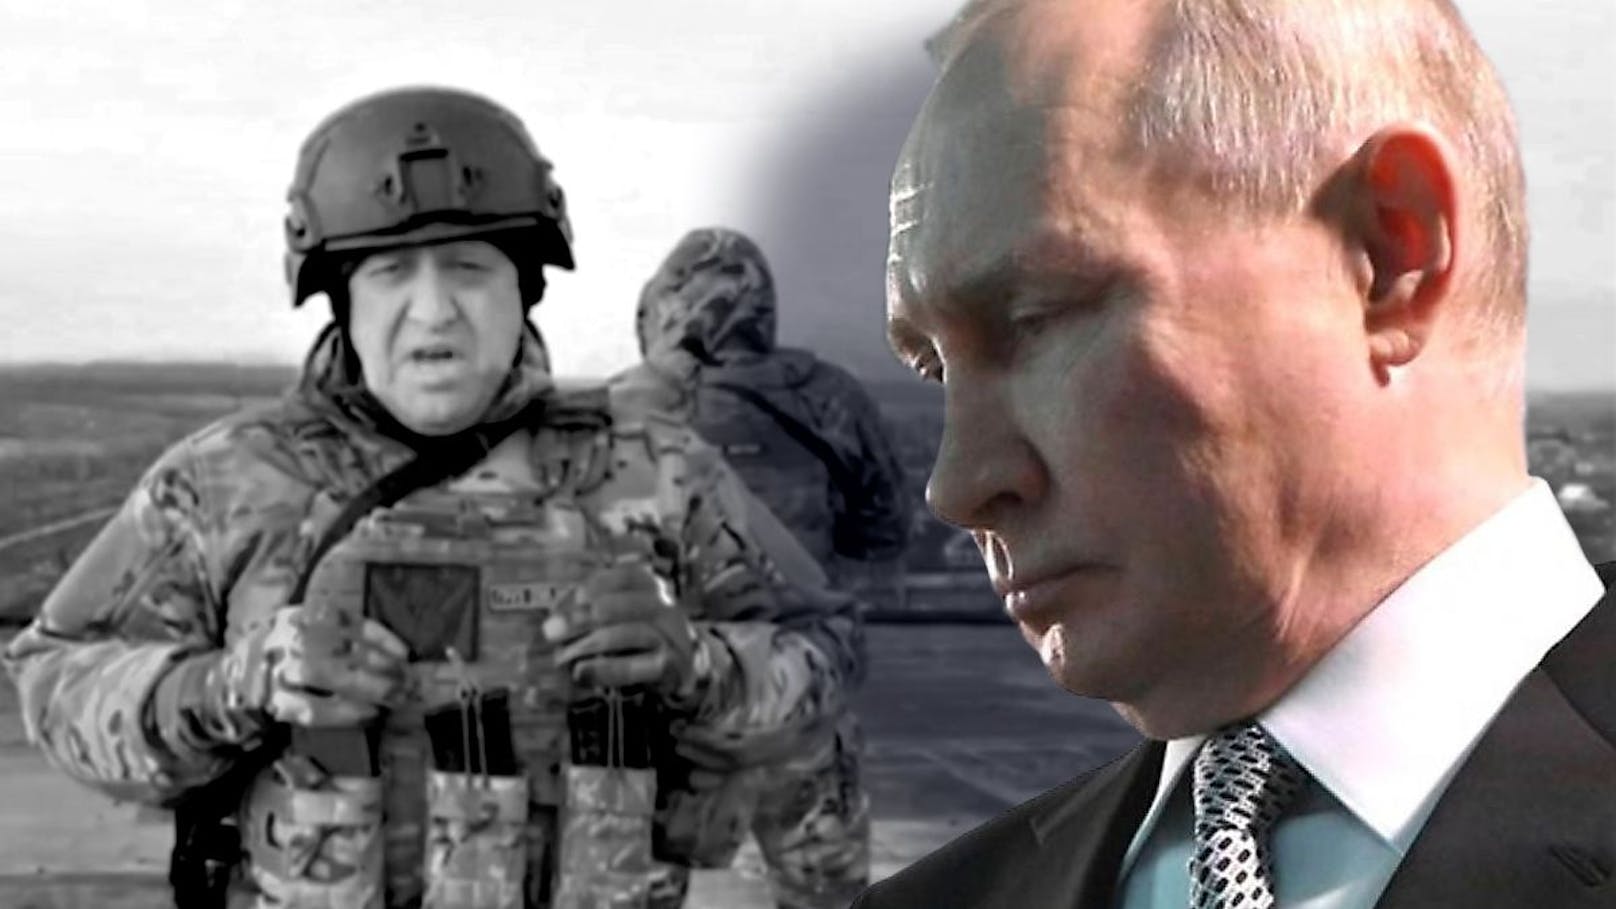 Darum steckt wohl Putin hinter Jewgeni Prigoschins Tod